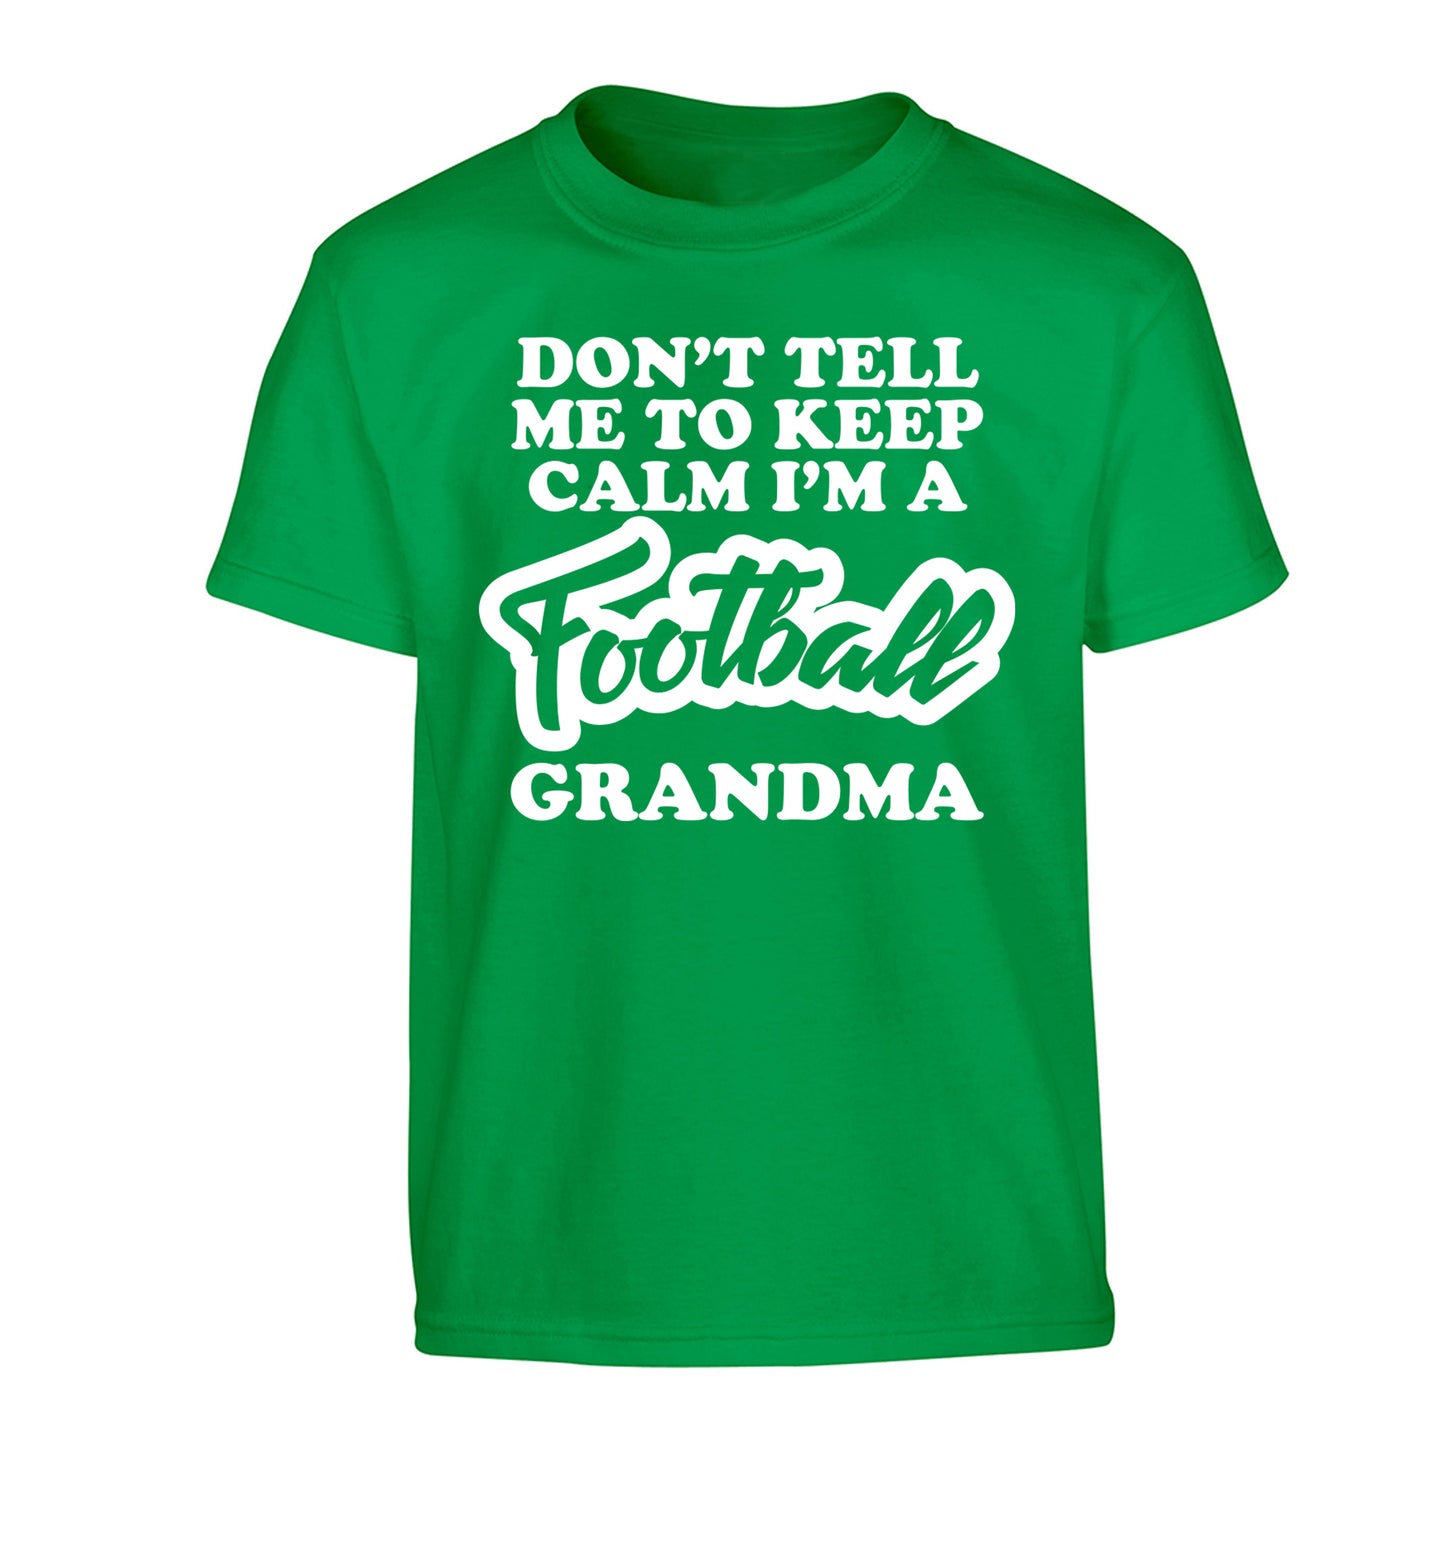 Don't tell me to keep calm I'm a football grandma Children's green Tshirt 12-14 Years